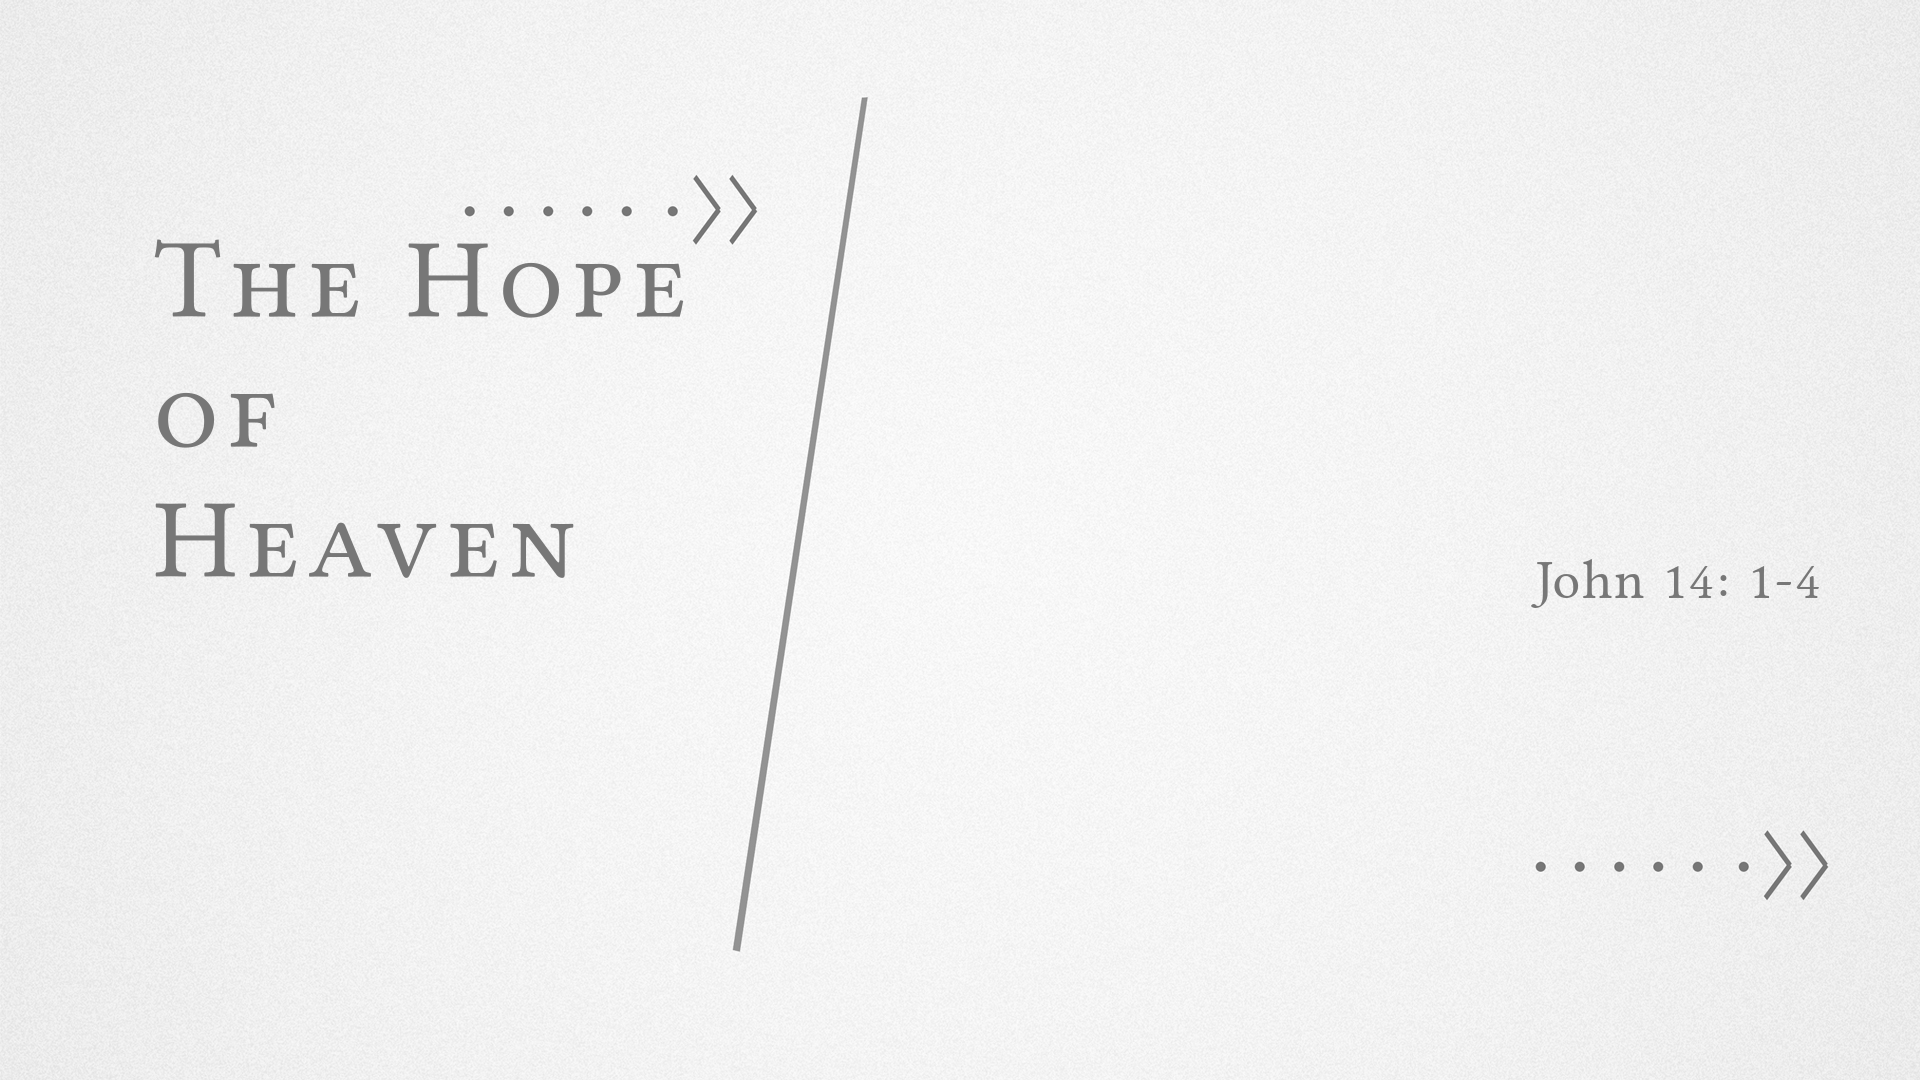 Feb 20, 2022 - The Hope of Heaven (Video) - John 14: 1-4